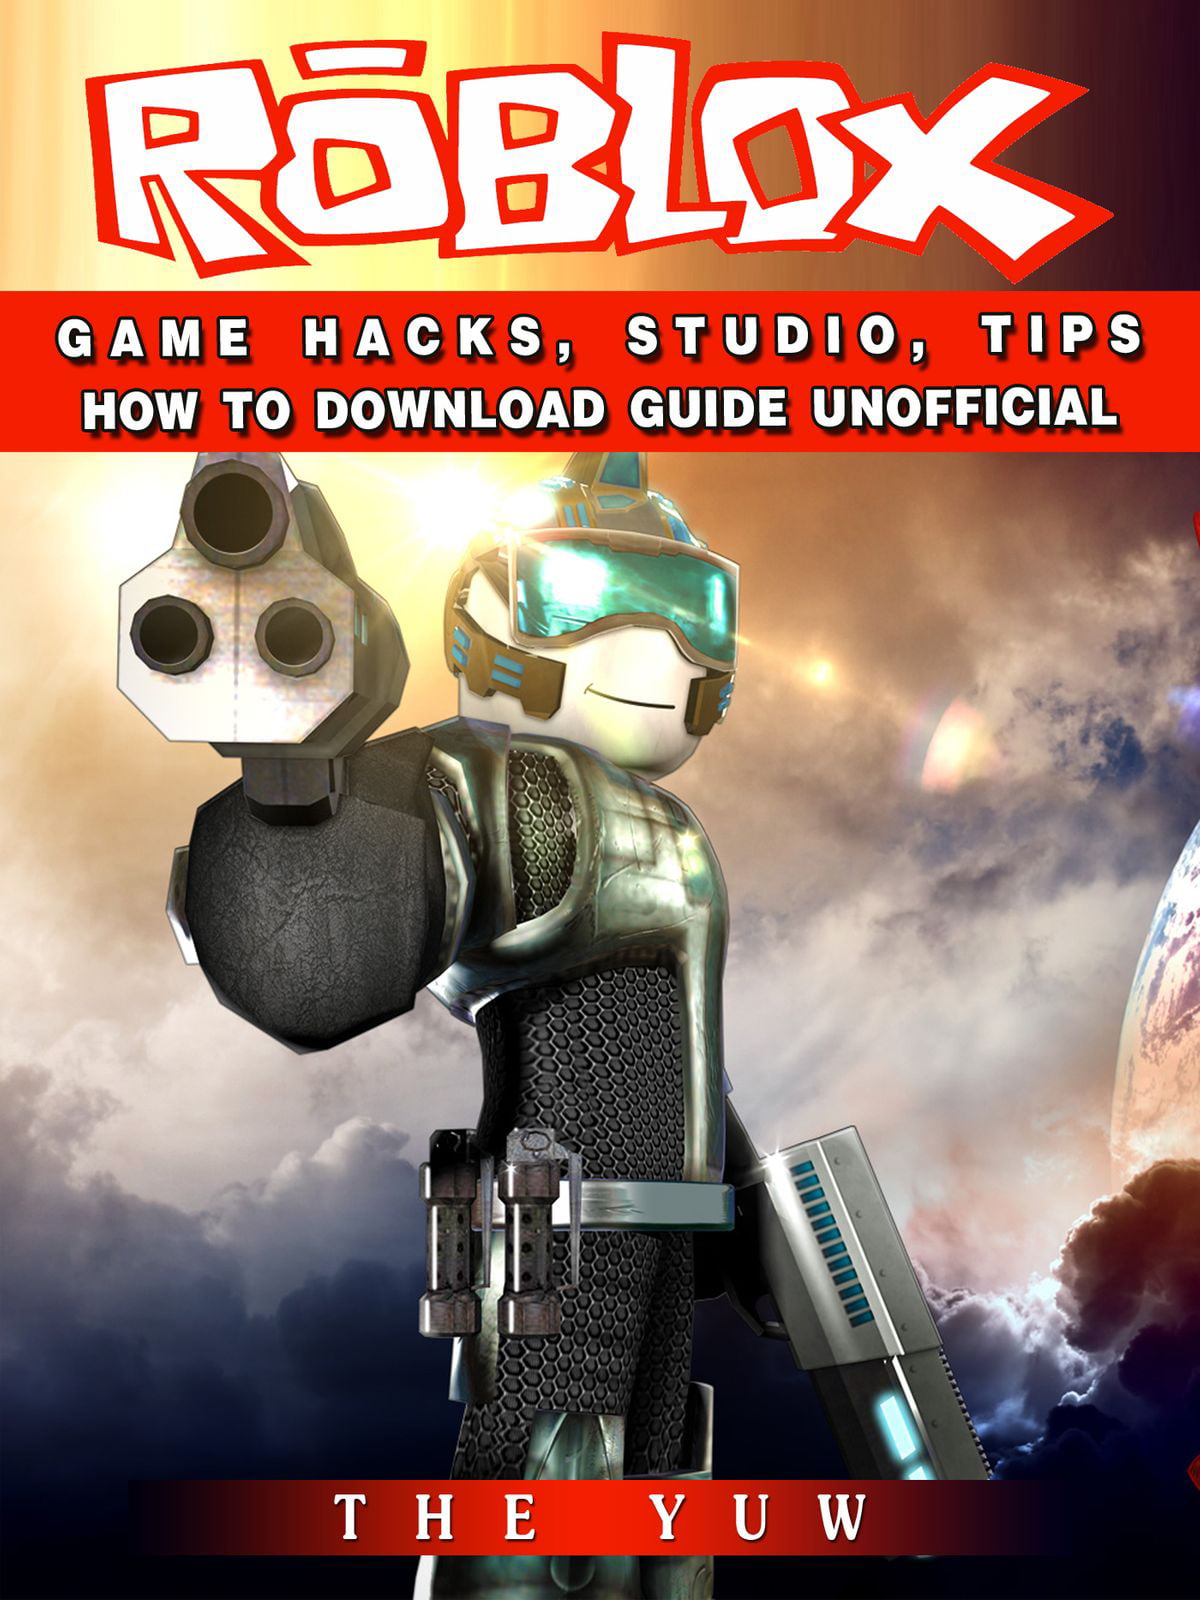 Roblox Game Hacks Studio Tips How To Download Guide Unofficial Ebook Walmart Com Walmart Com - full download ninja animation pack review roblox